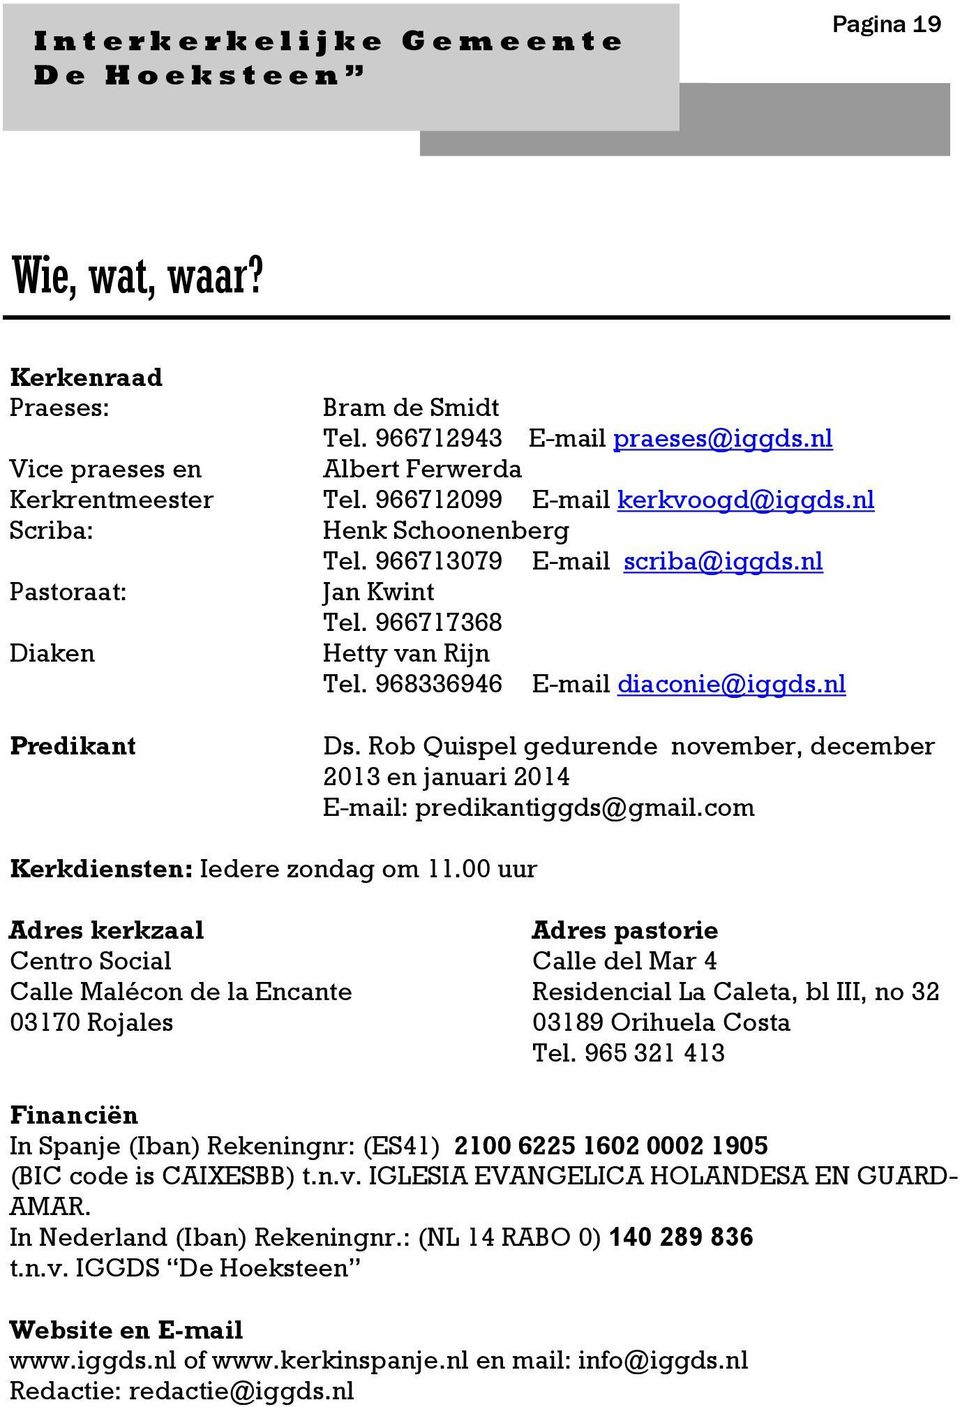 968336946 E-mail diaconie@iggds.nl Ds. Rob Quispel gedurende november, december 2013 en januari 2014 E-mail: predikantiggds@gmail.com Kerkdiensten: Iedere zondag om 11.